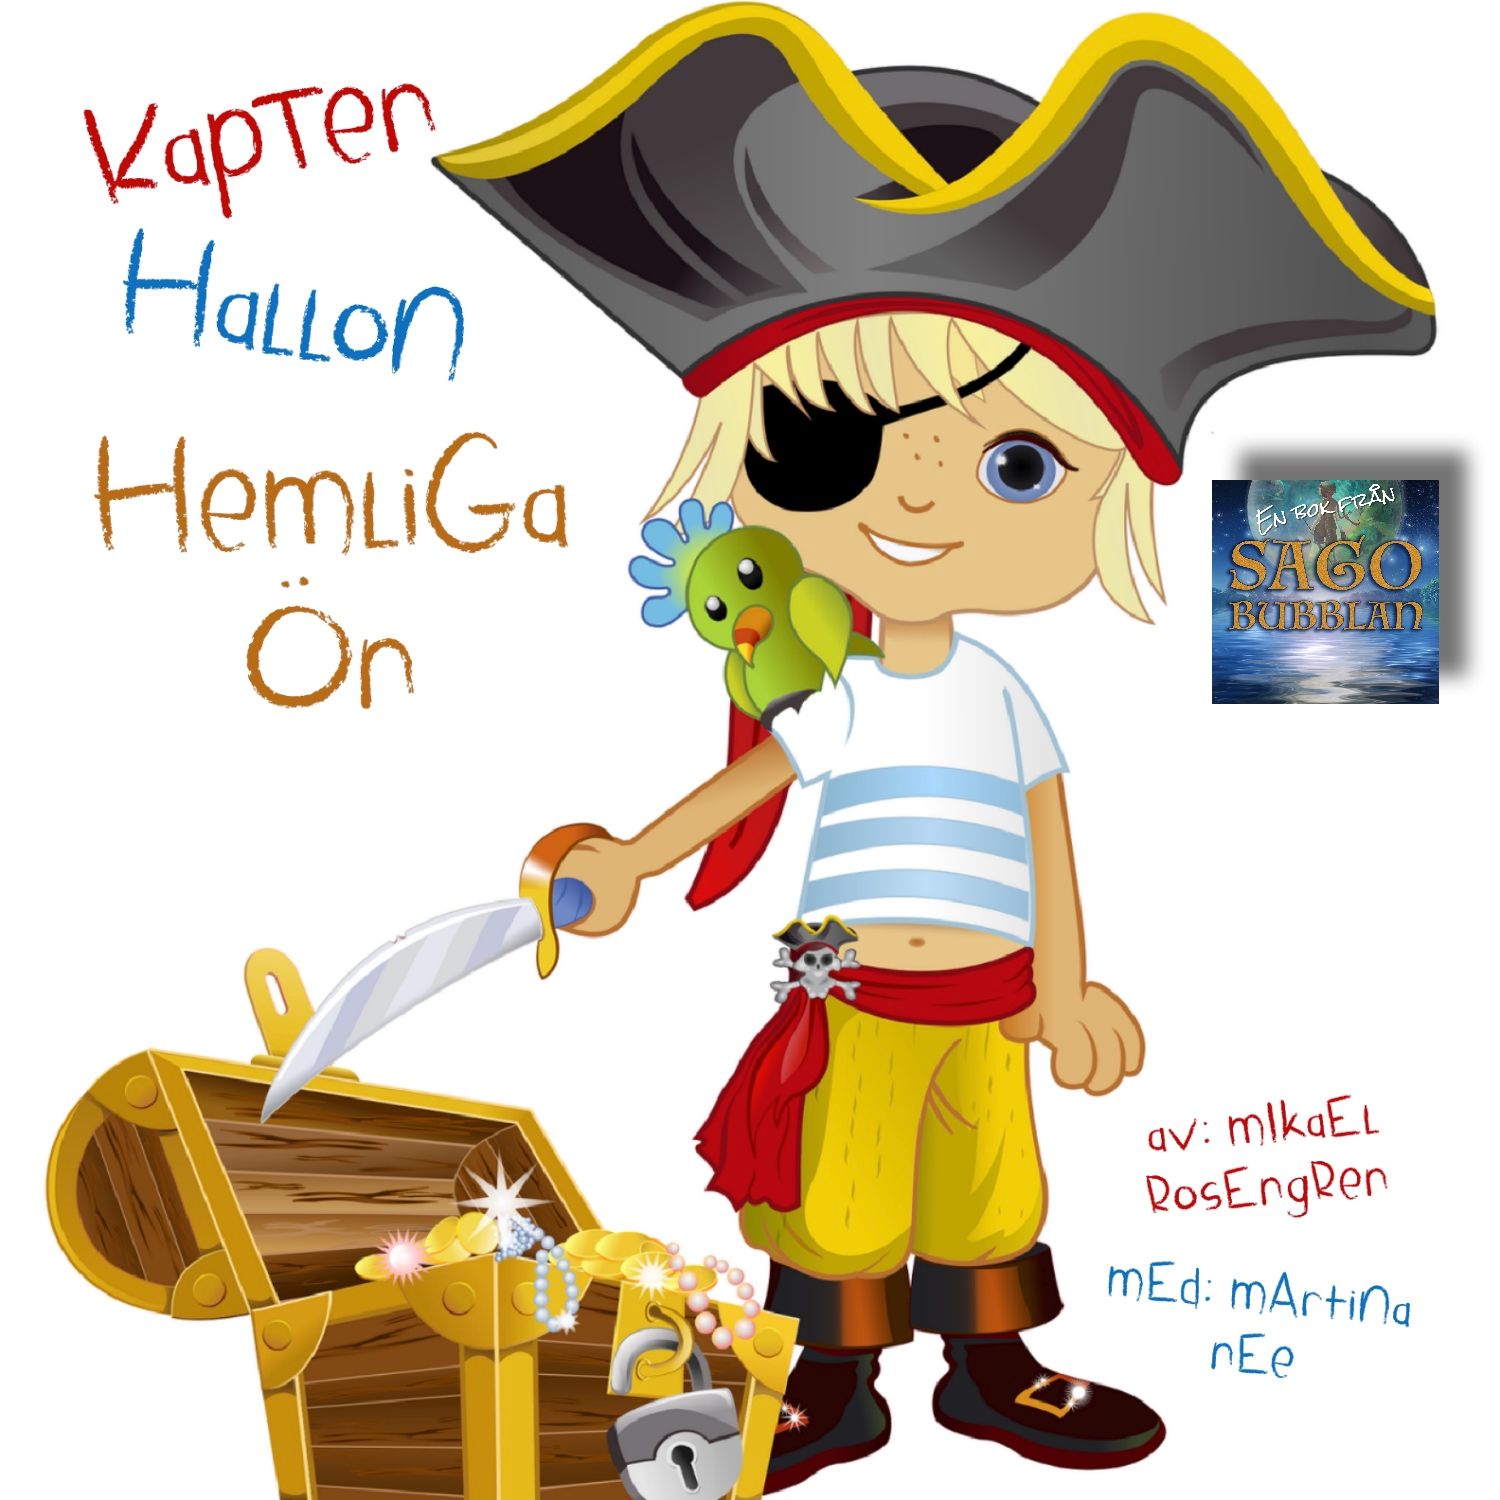 Kapten Hallon : Hemliga ön, audiobook by Mikael Rosengren